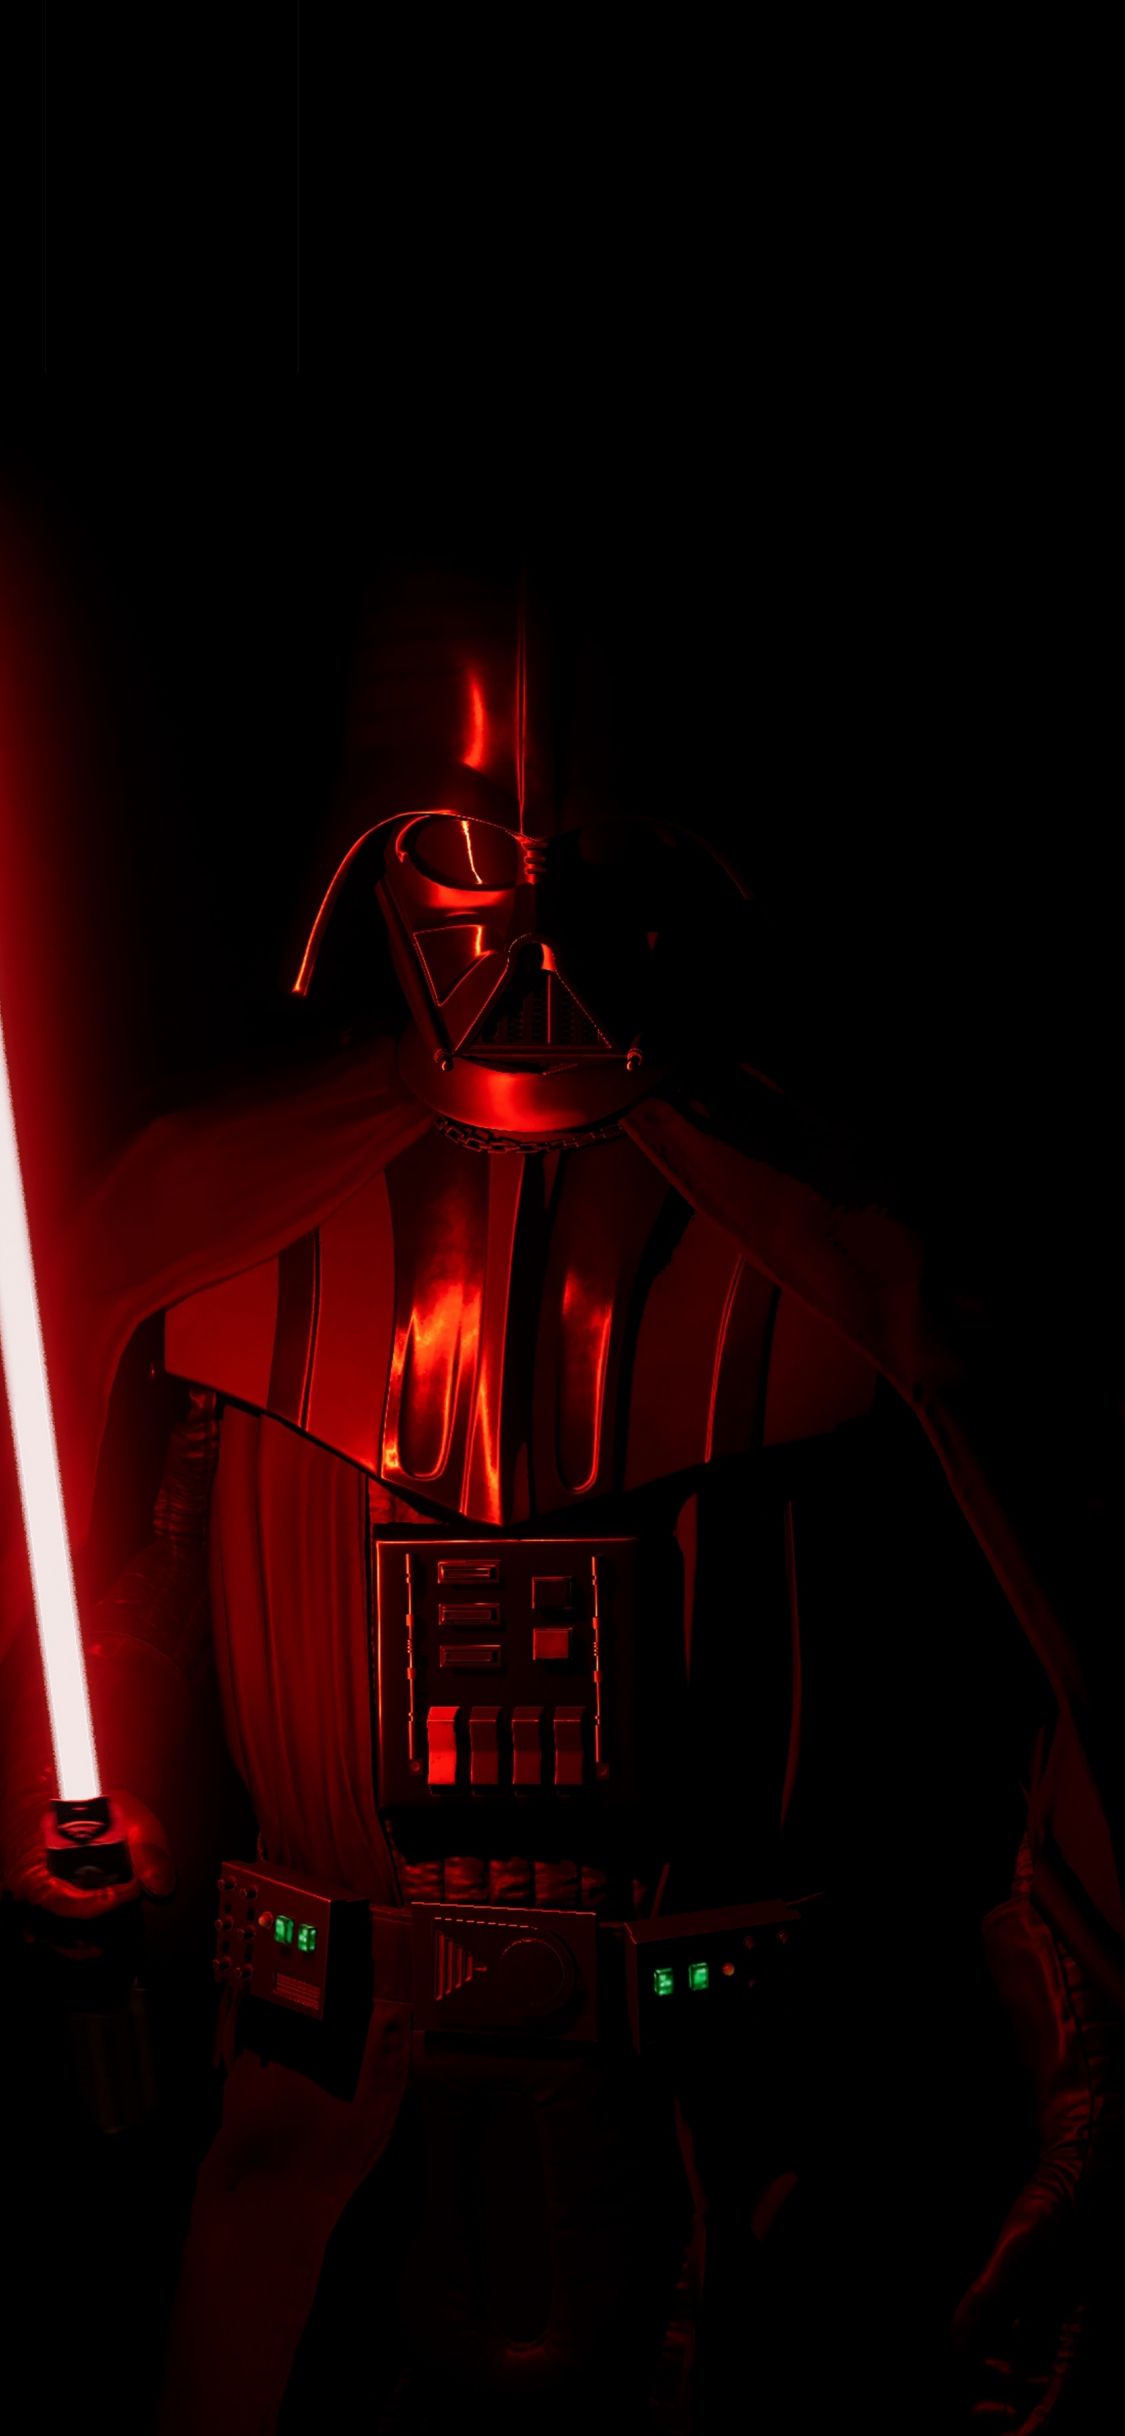 Darth Vader Star Wars iPhone X Wallpaper